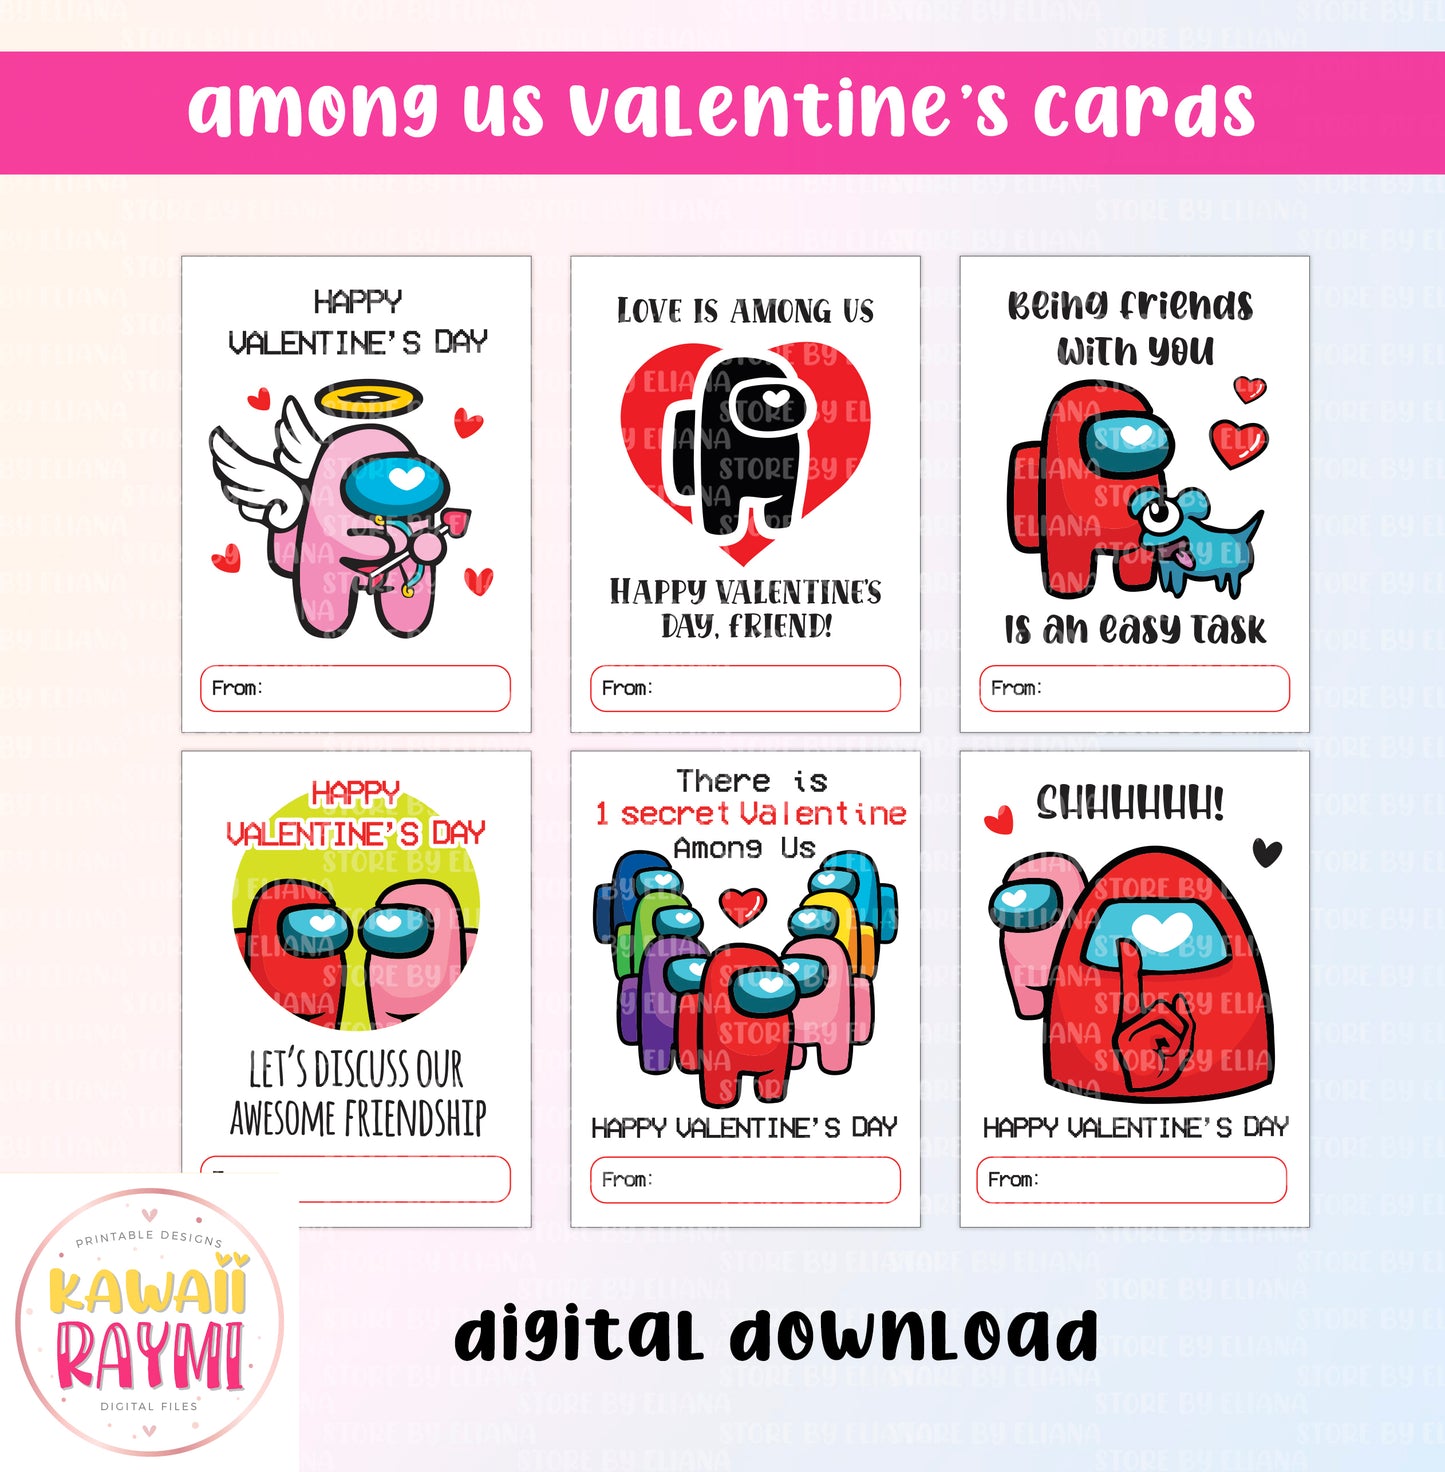 Among Us kids valentine's cards printable #1, among us cards, valentine's day